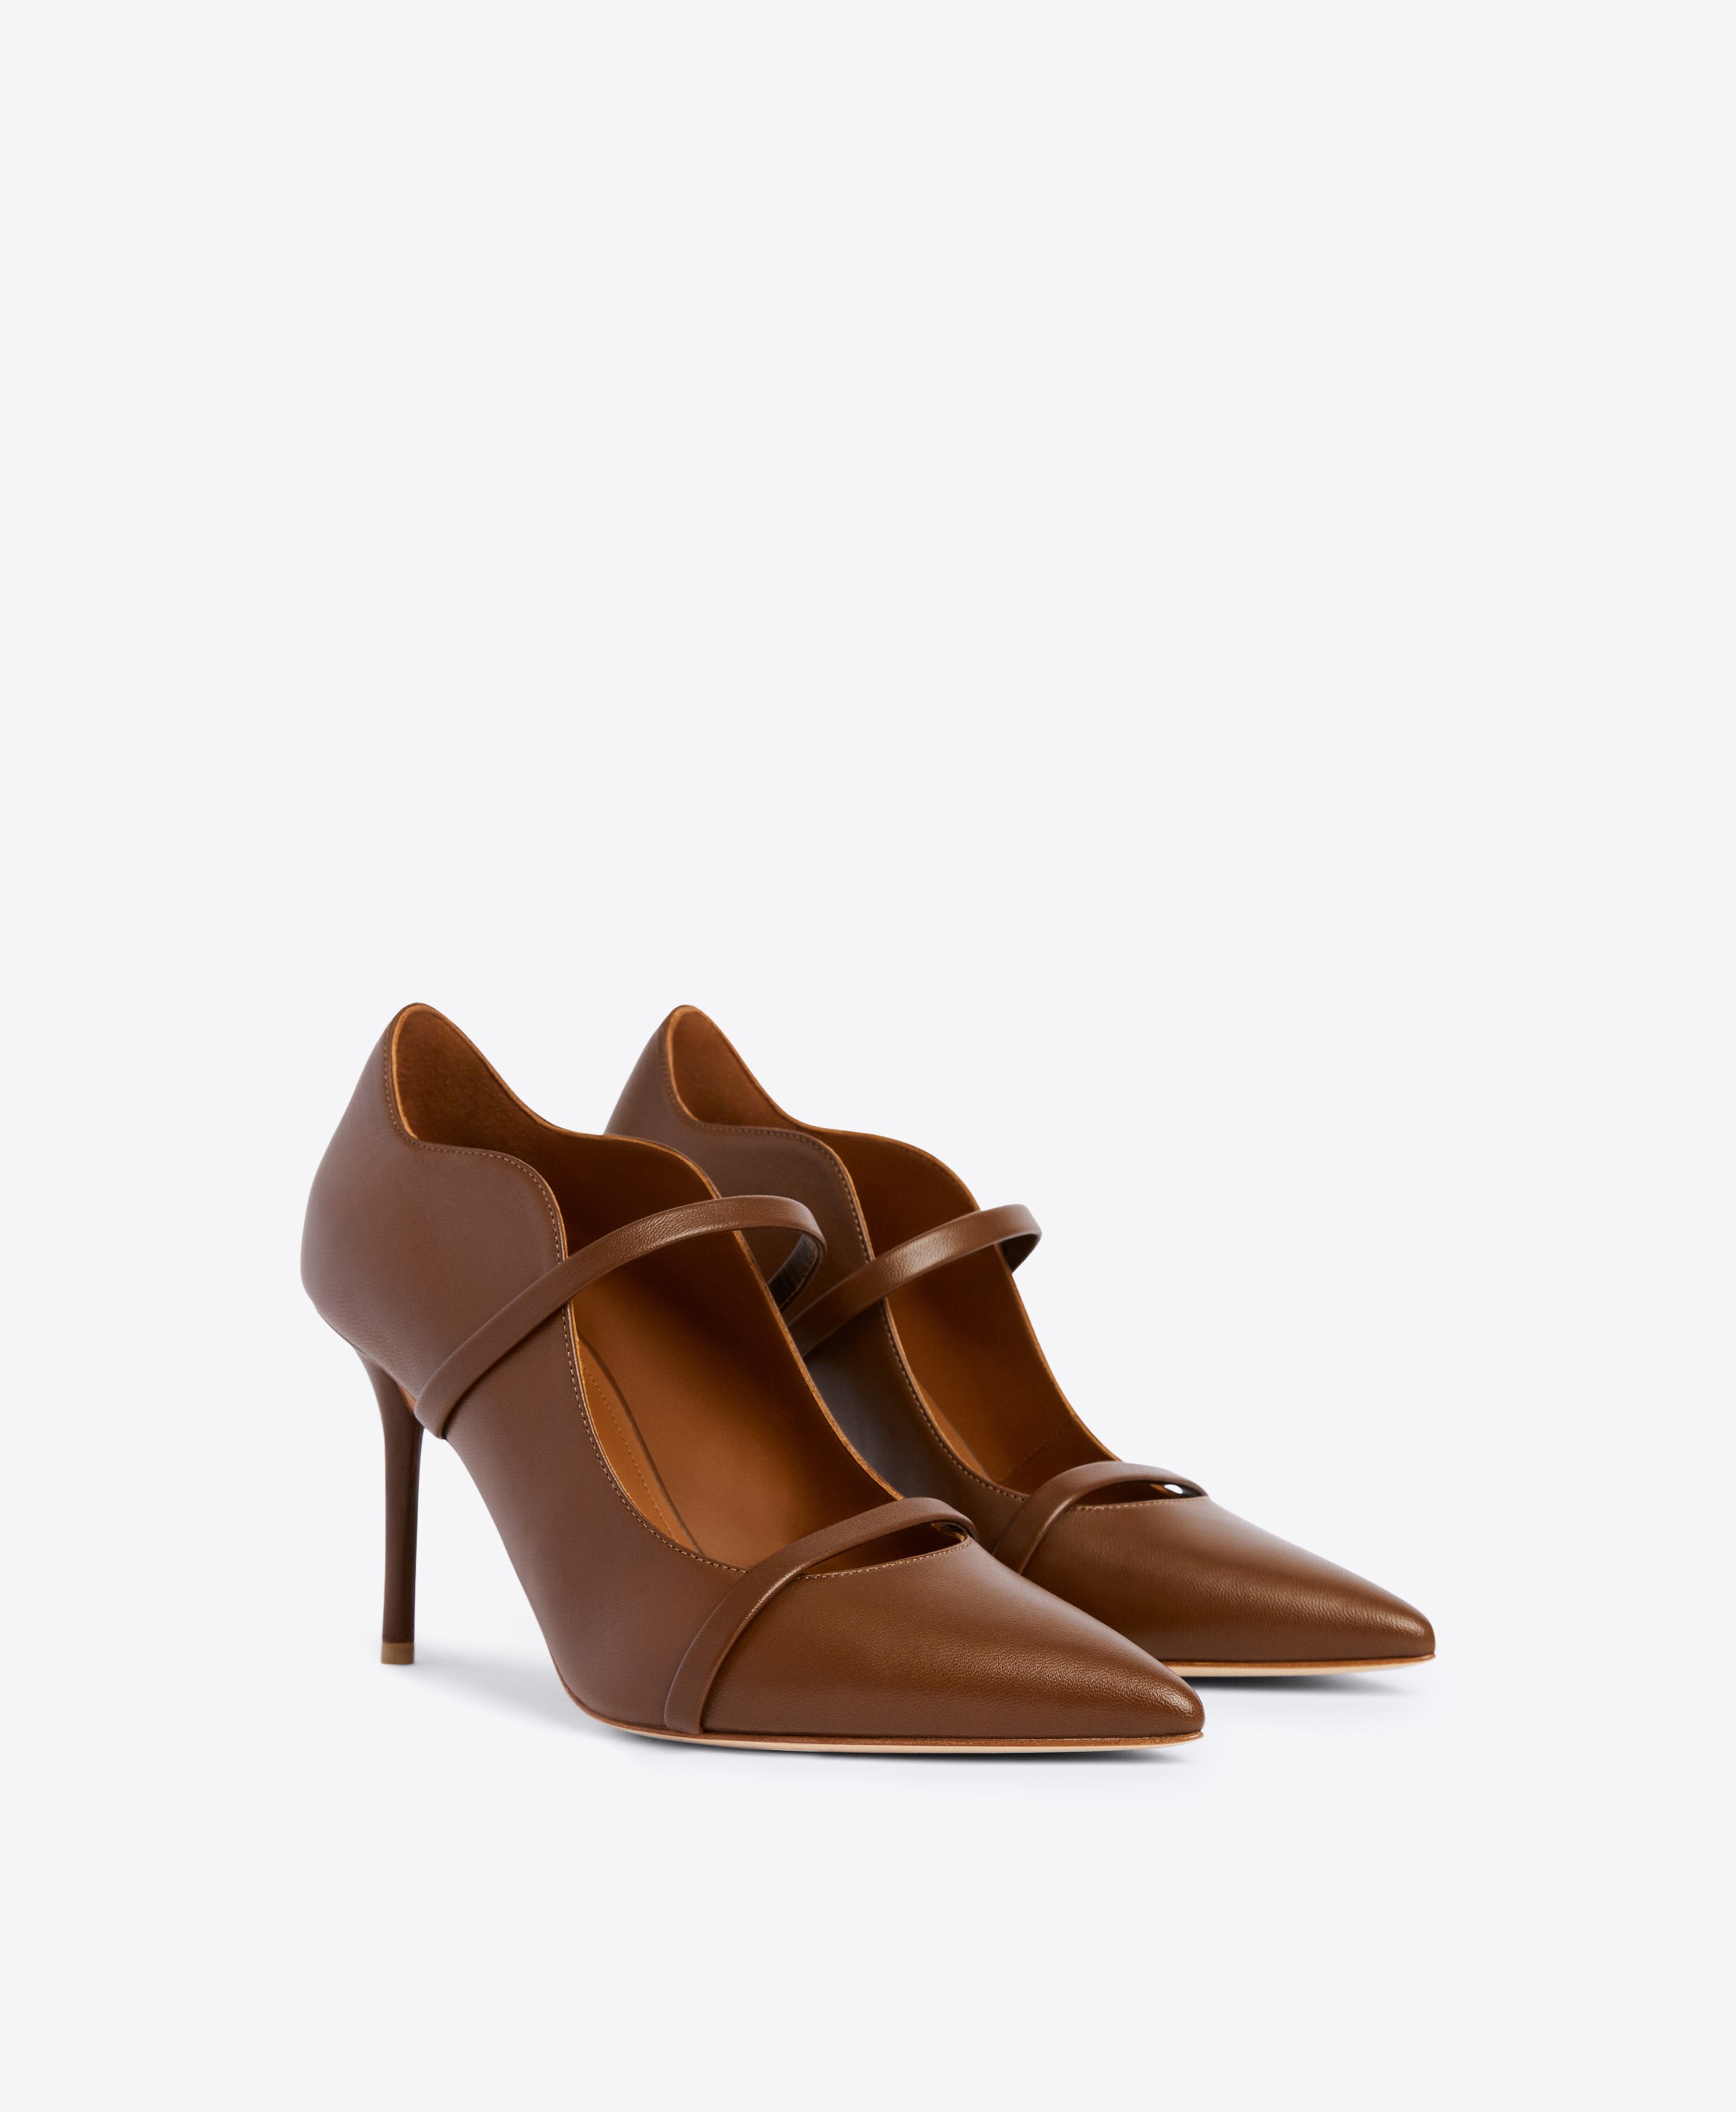 Kate 100 metallic leather pumps in brown - Christian Louboutin | Mytheresa